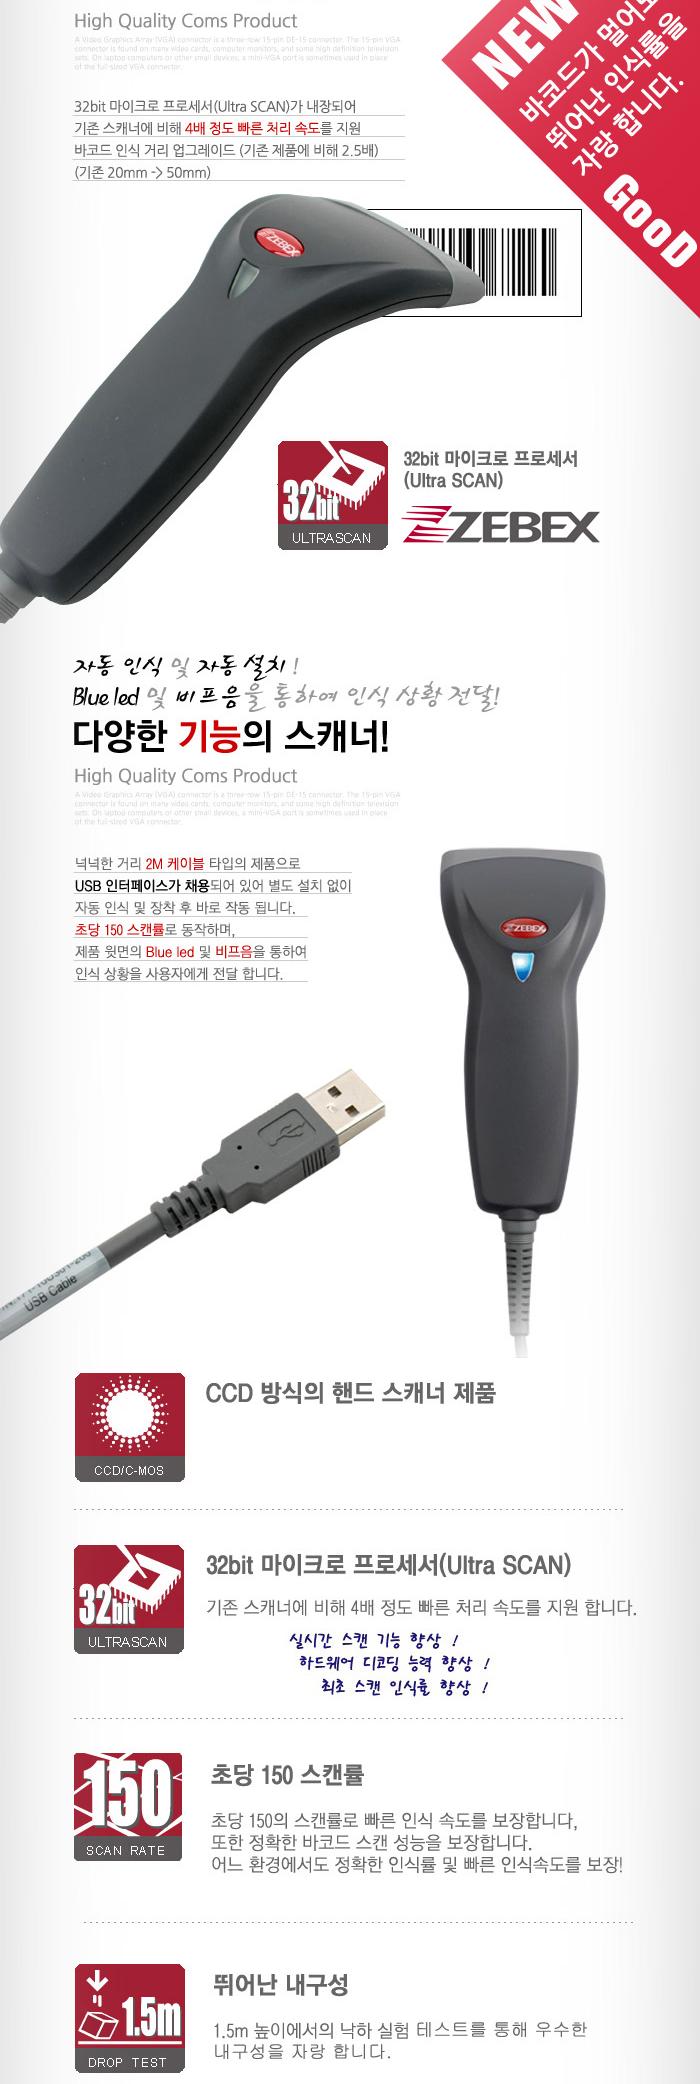 Coms ڵ ĳ(Z-3220 U B). USB  ڵ彺ĵ ڵ彺ĳ ڵν ڵ彺ĳ ޴ڵ彺ĳ